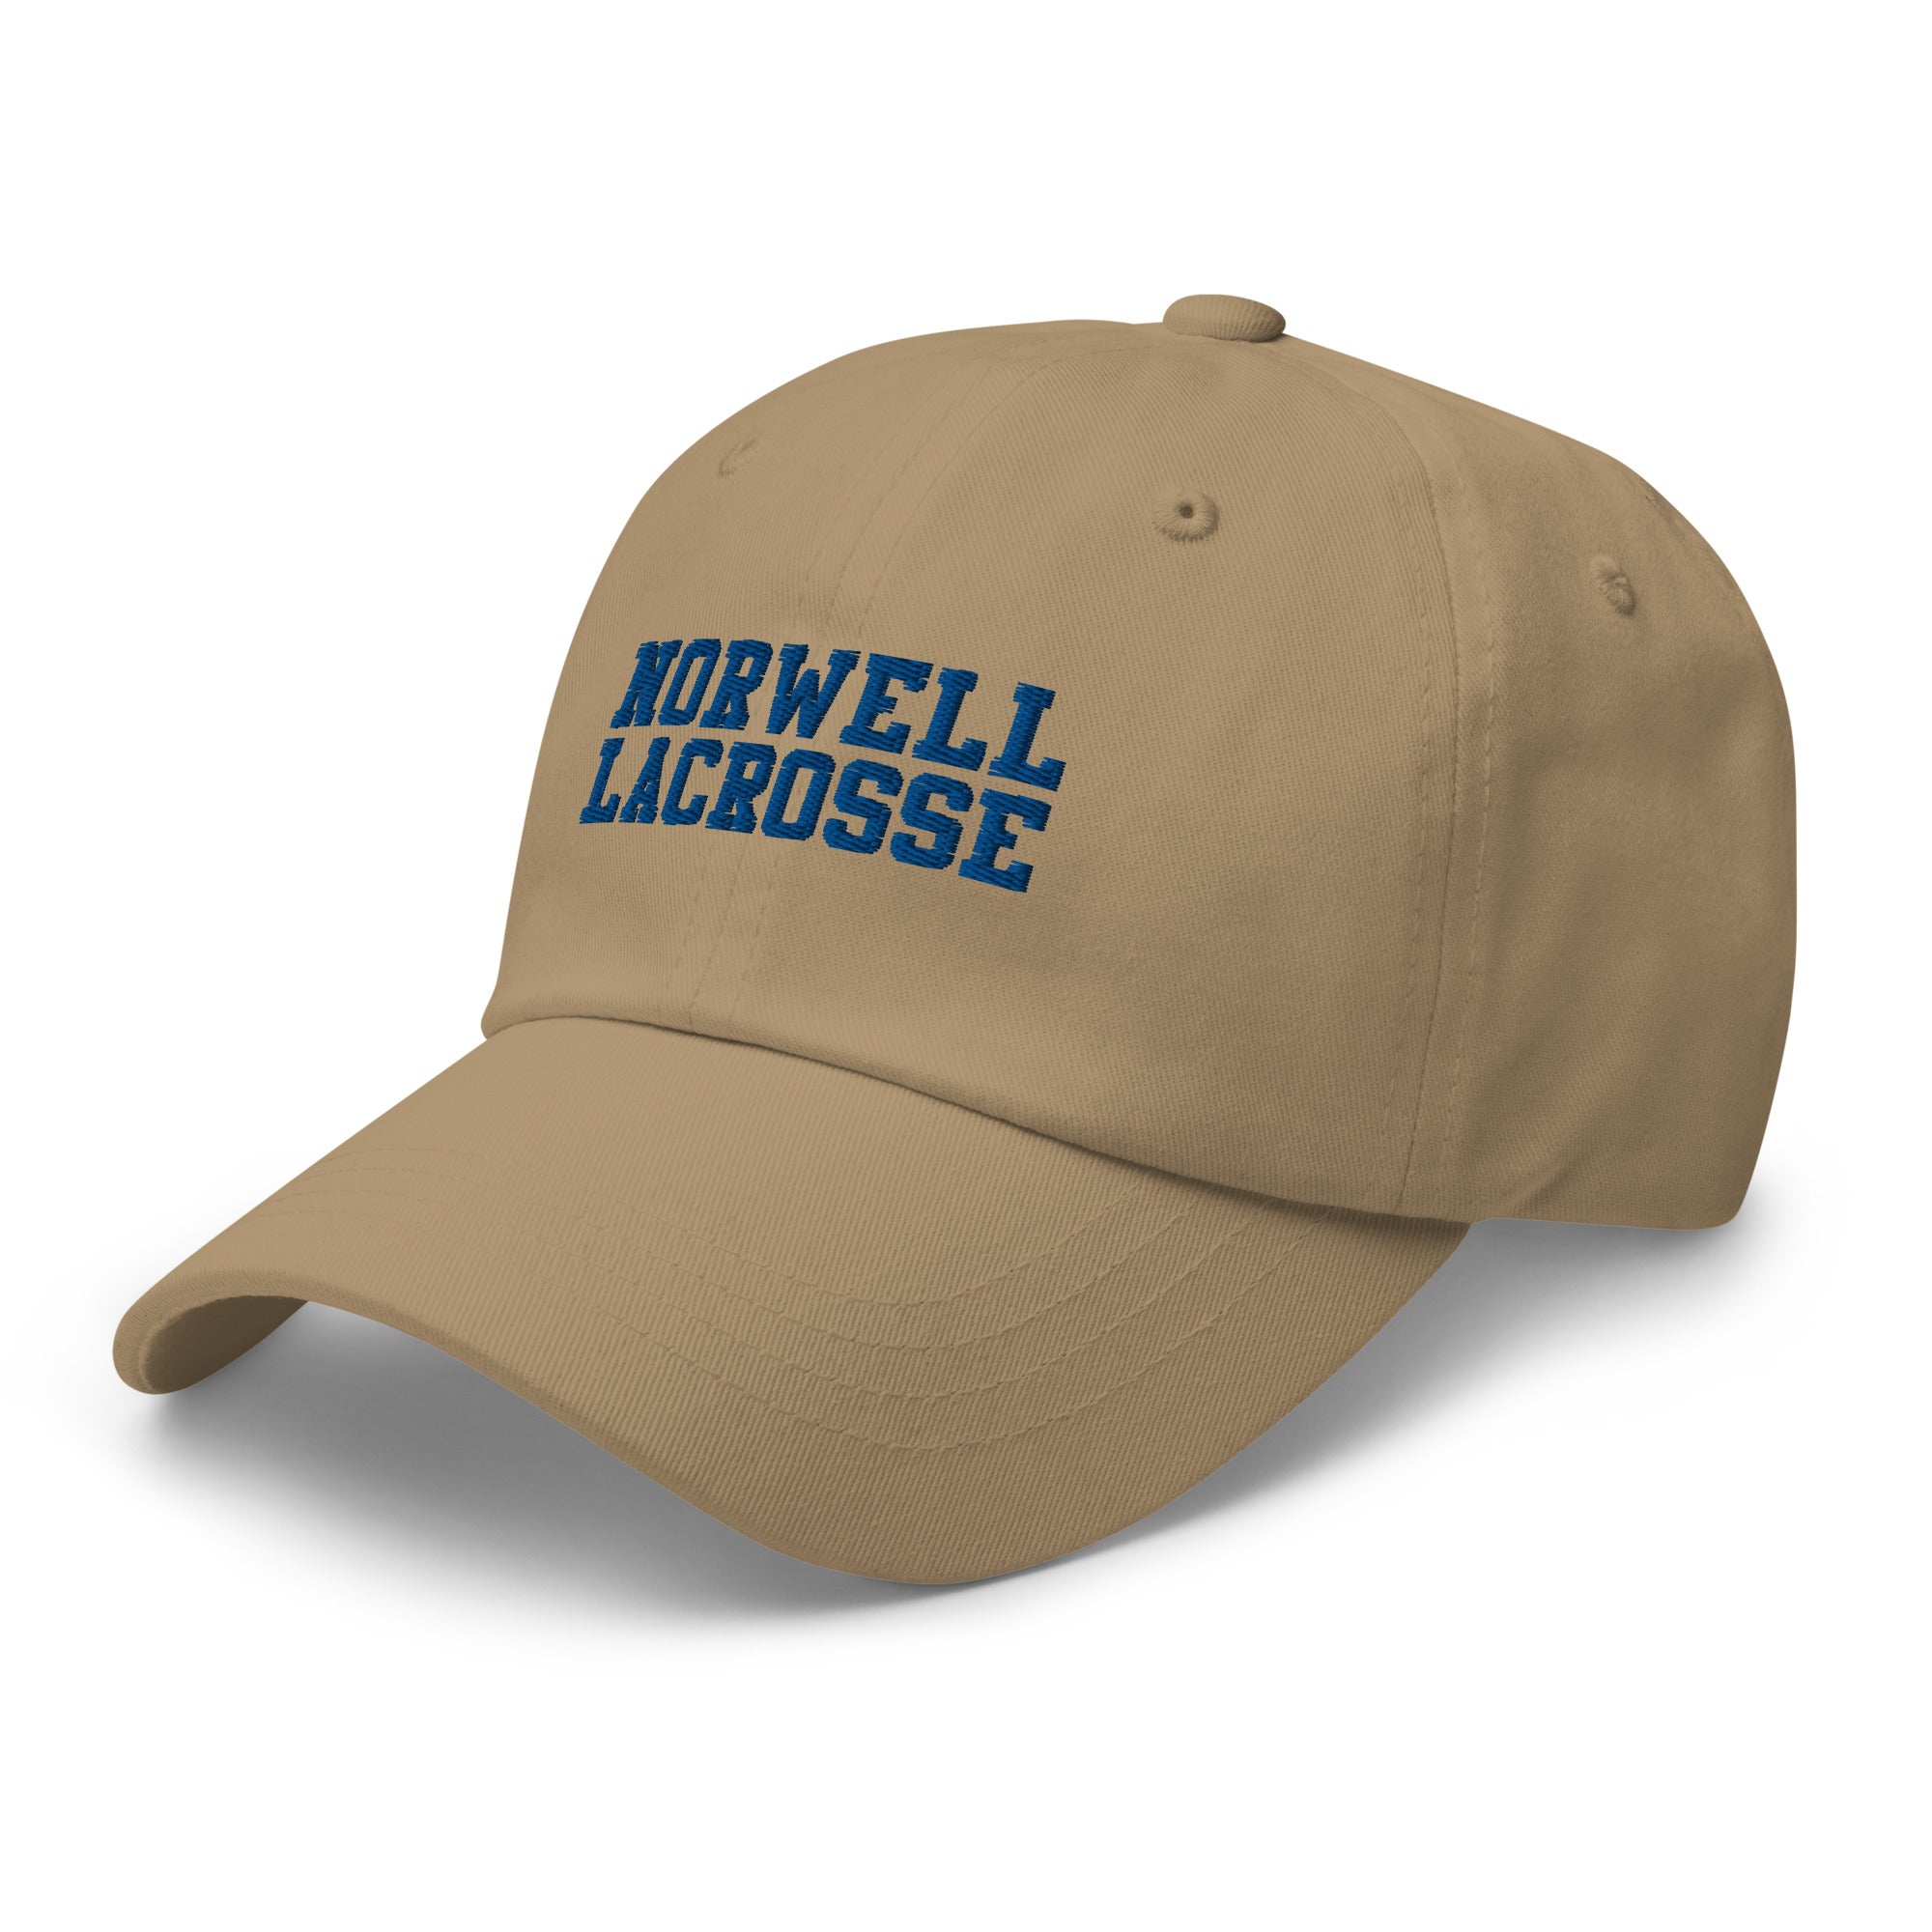 Norwell Dad hat